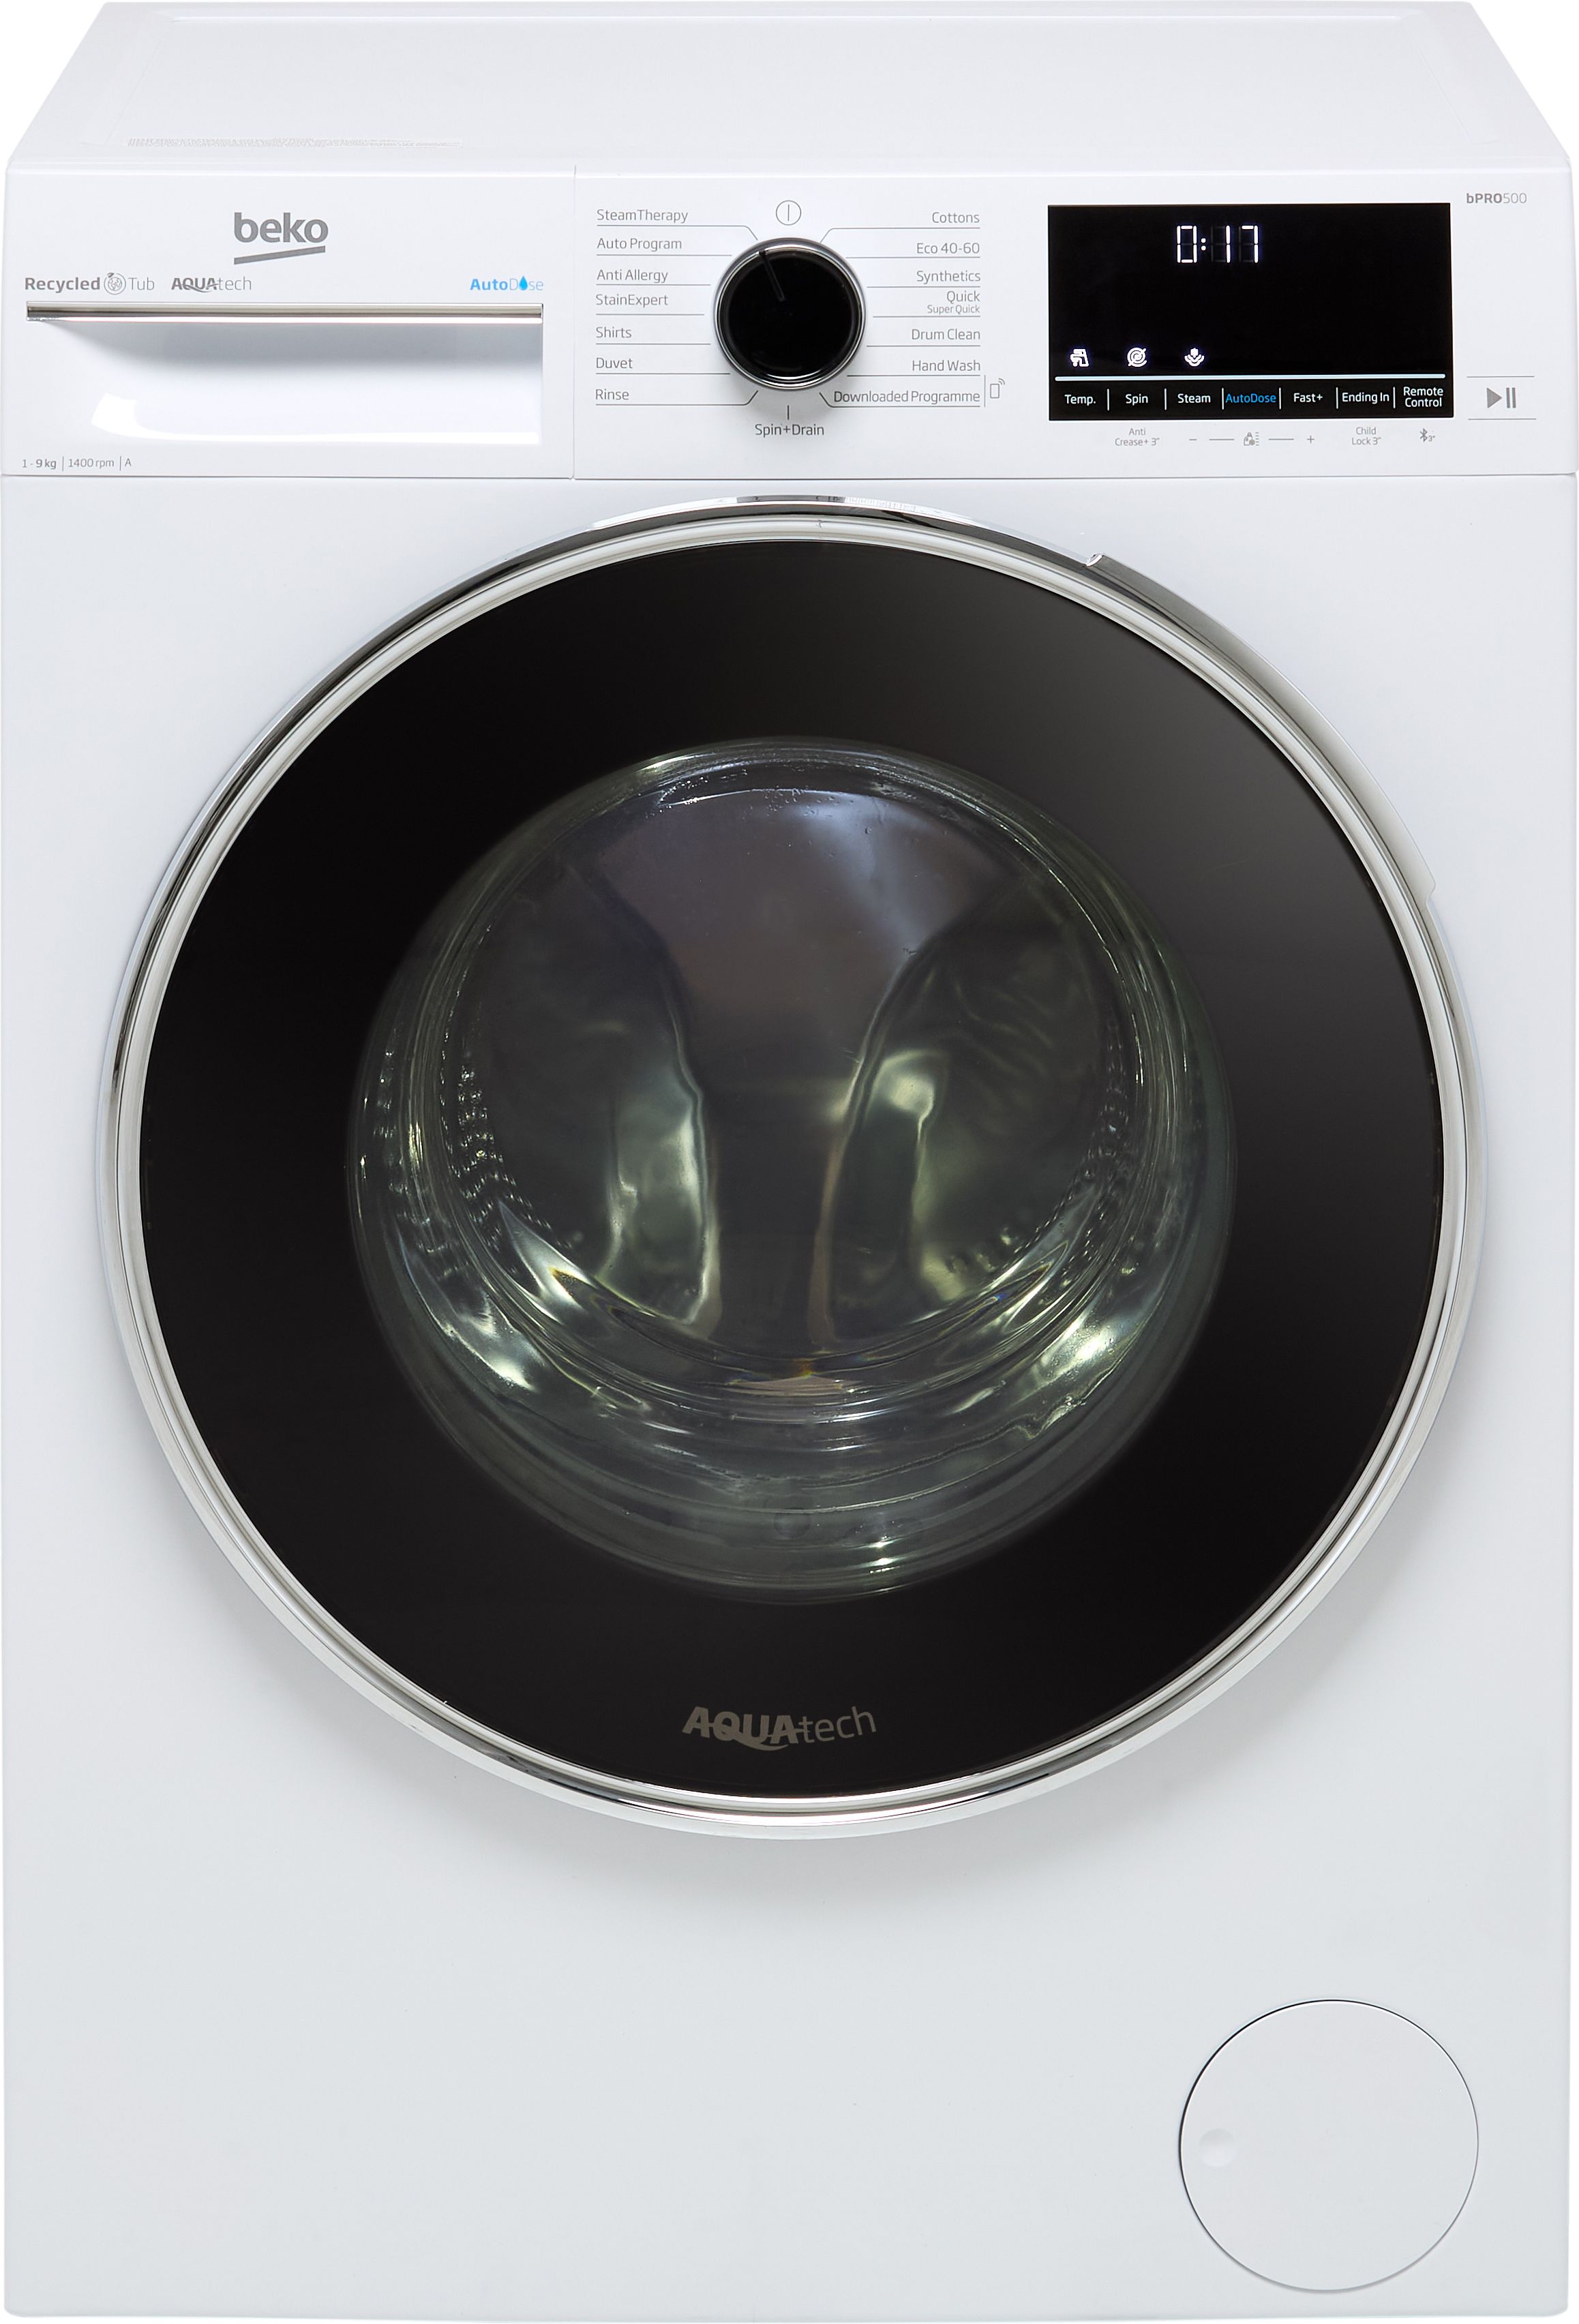 Beko Aquatech RecycledTub B5W5941DW 9kg Washing Machine with 1400 rpm - White - A Rated, White